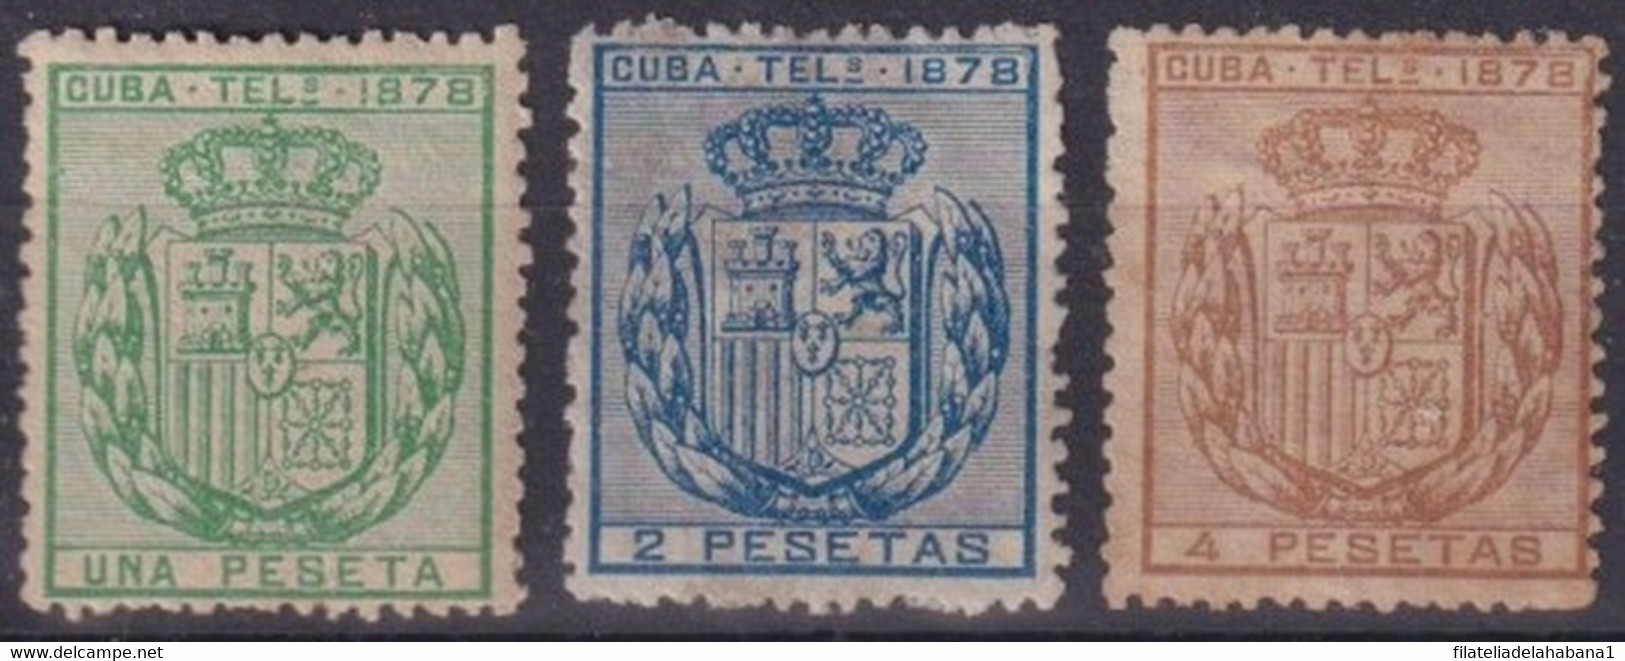 1878-197 CUBA SPAIN ESPAÑA 1878 COMPLETE SET TELEGRAPH TELEGRAFOS UNUSED NO GUM. - Telegrafo